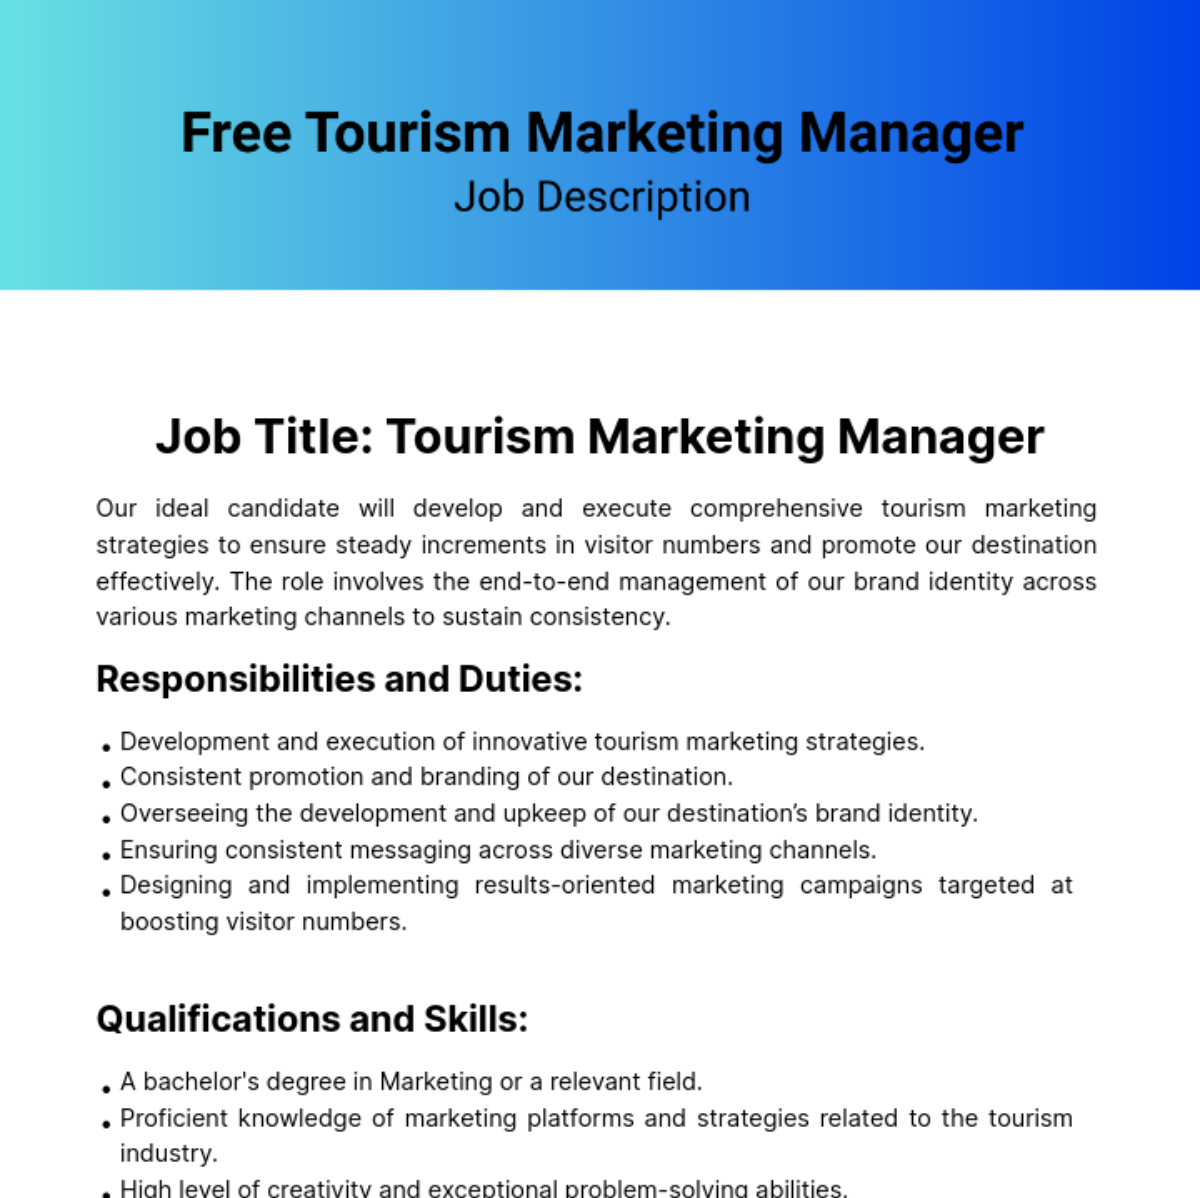 Free Tourism Marketing Manager Job Description Template